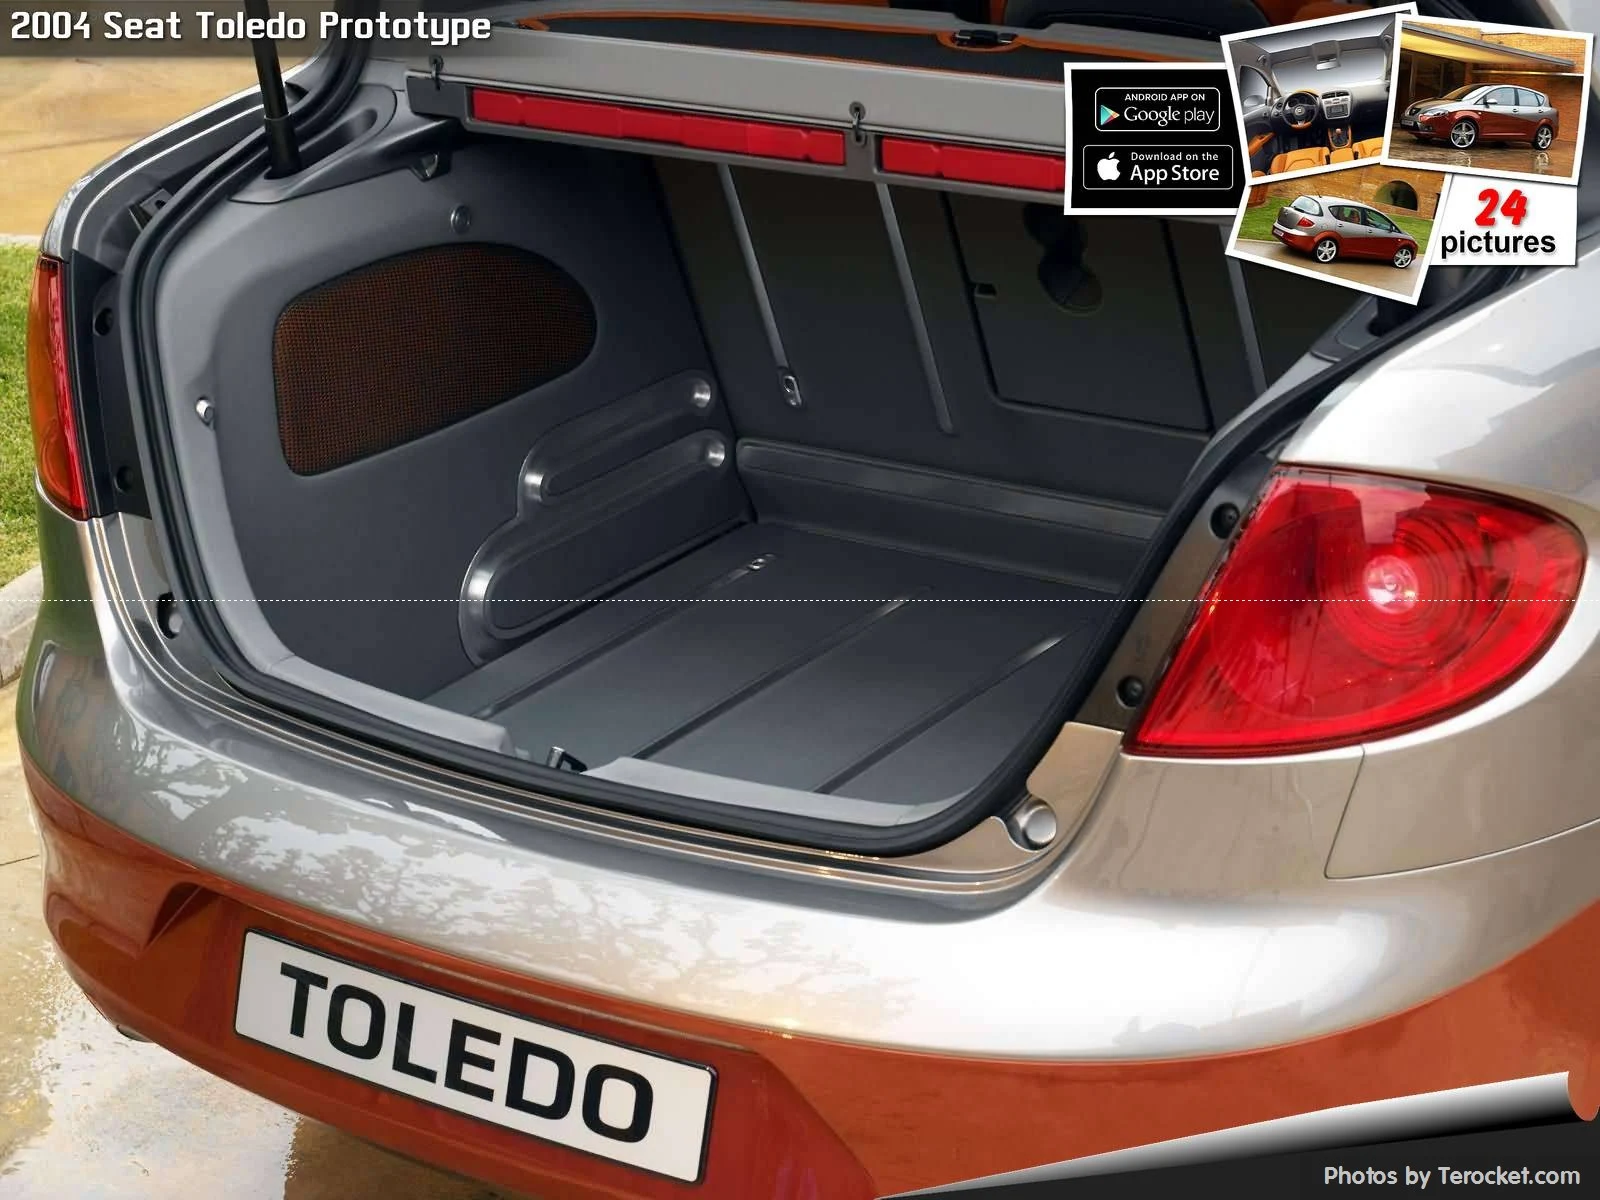 Hình ảnh xe ô tô Seat Toledo Prototype 2004 & nội ngoại thất